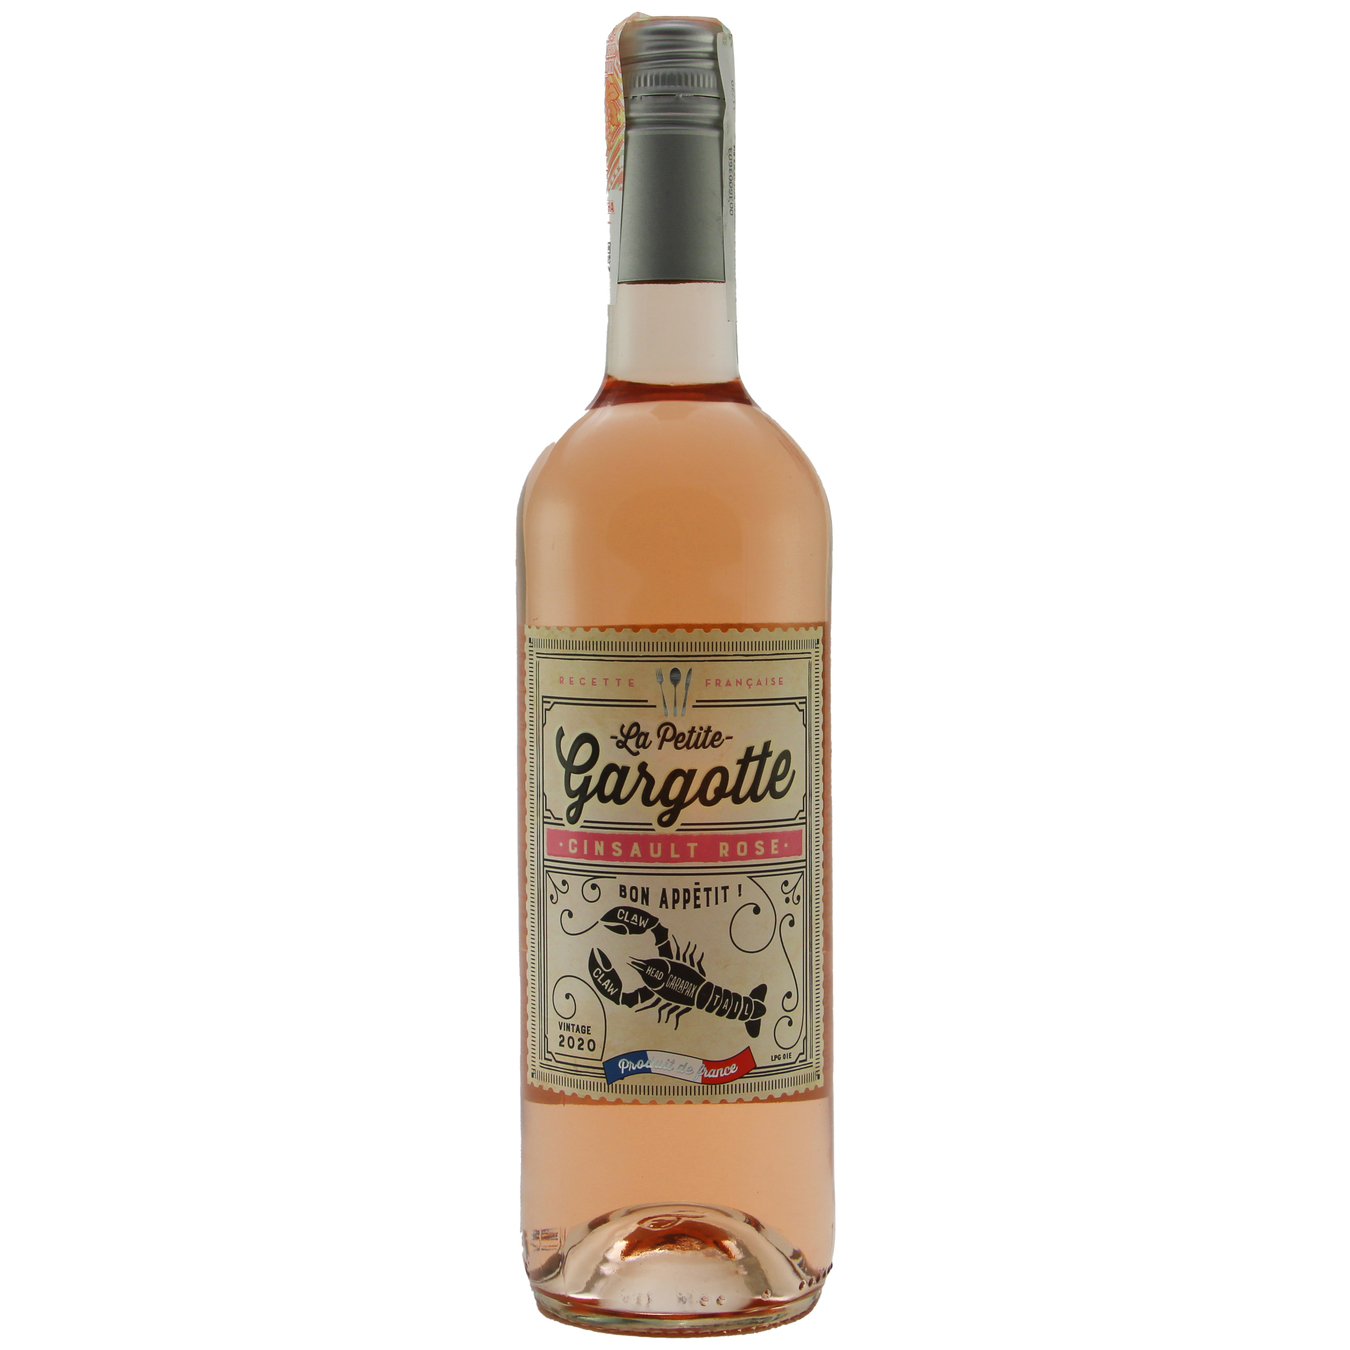 Gargotte Cinsault Rose Pays d'Oc pink semi-dry wine 12% 0,75l